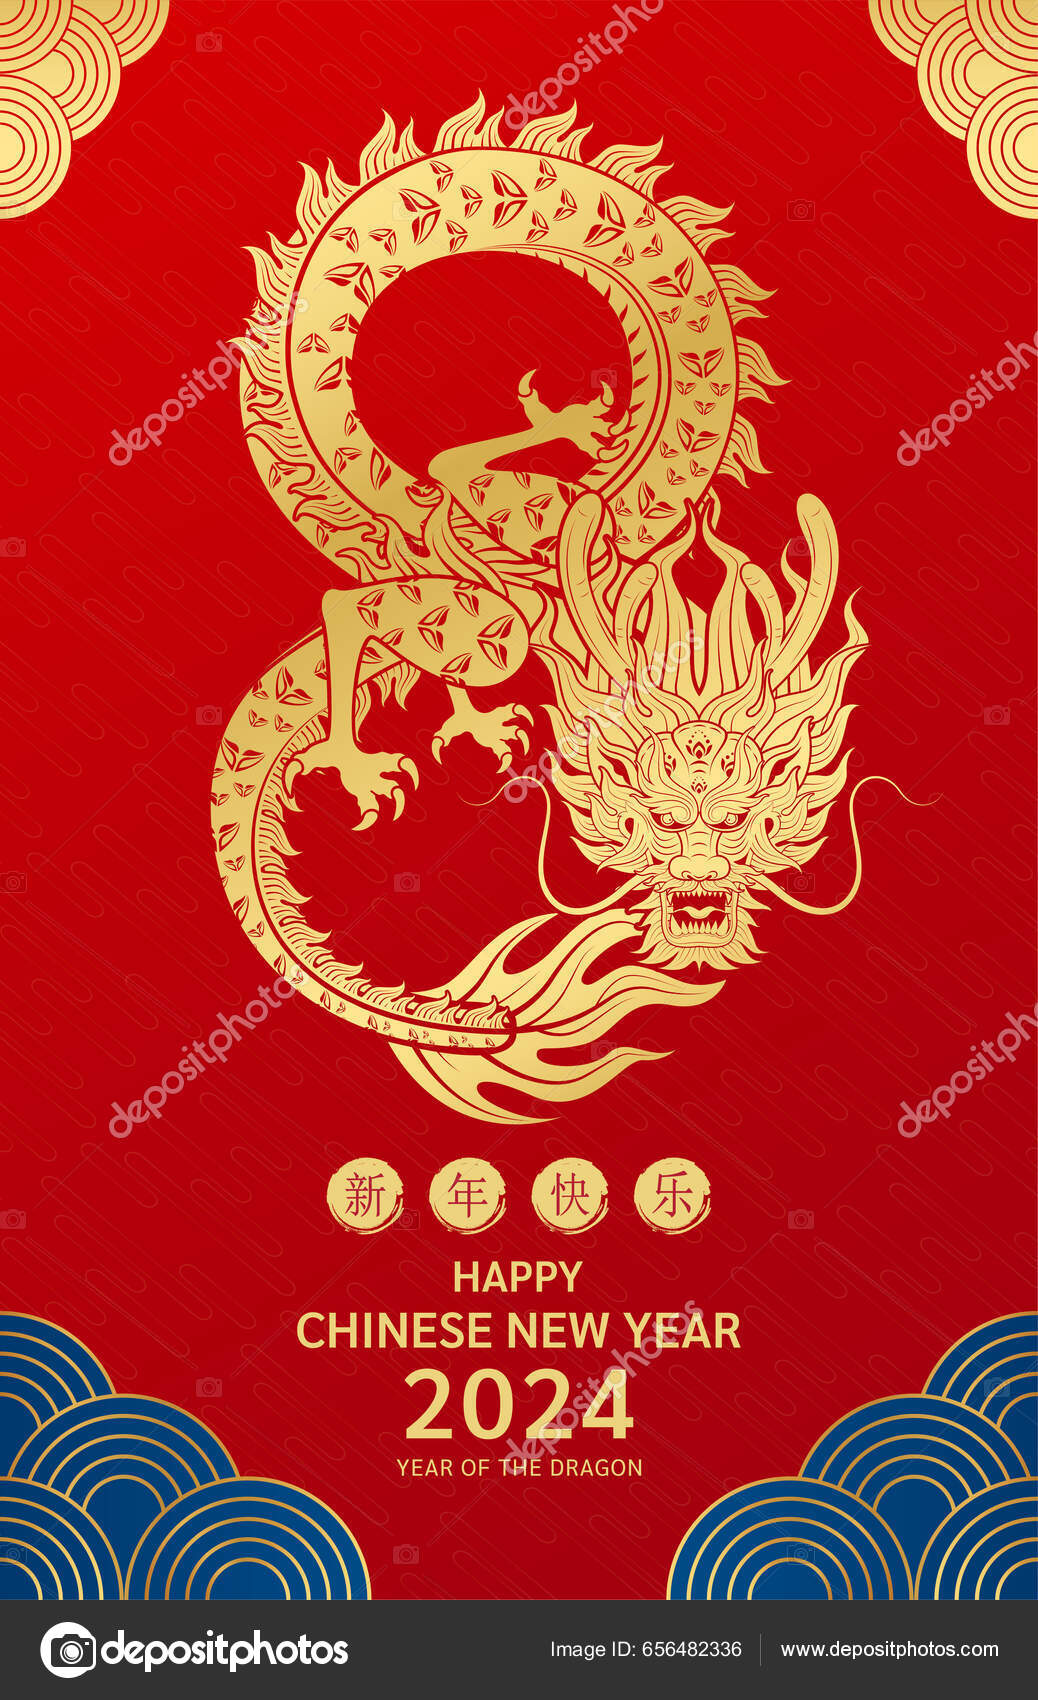 Depositphotos 656482336 Stock Illustration Happy Chinese New Year 2024 